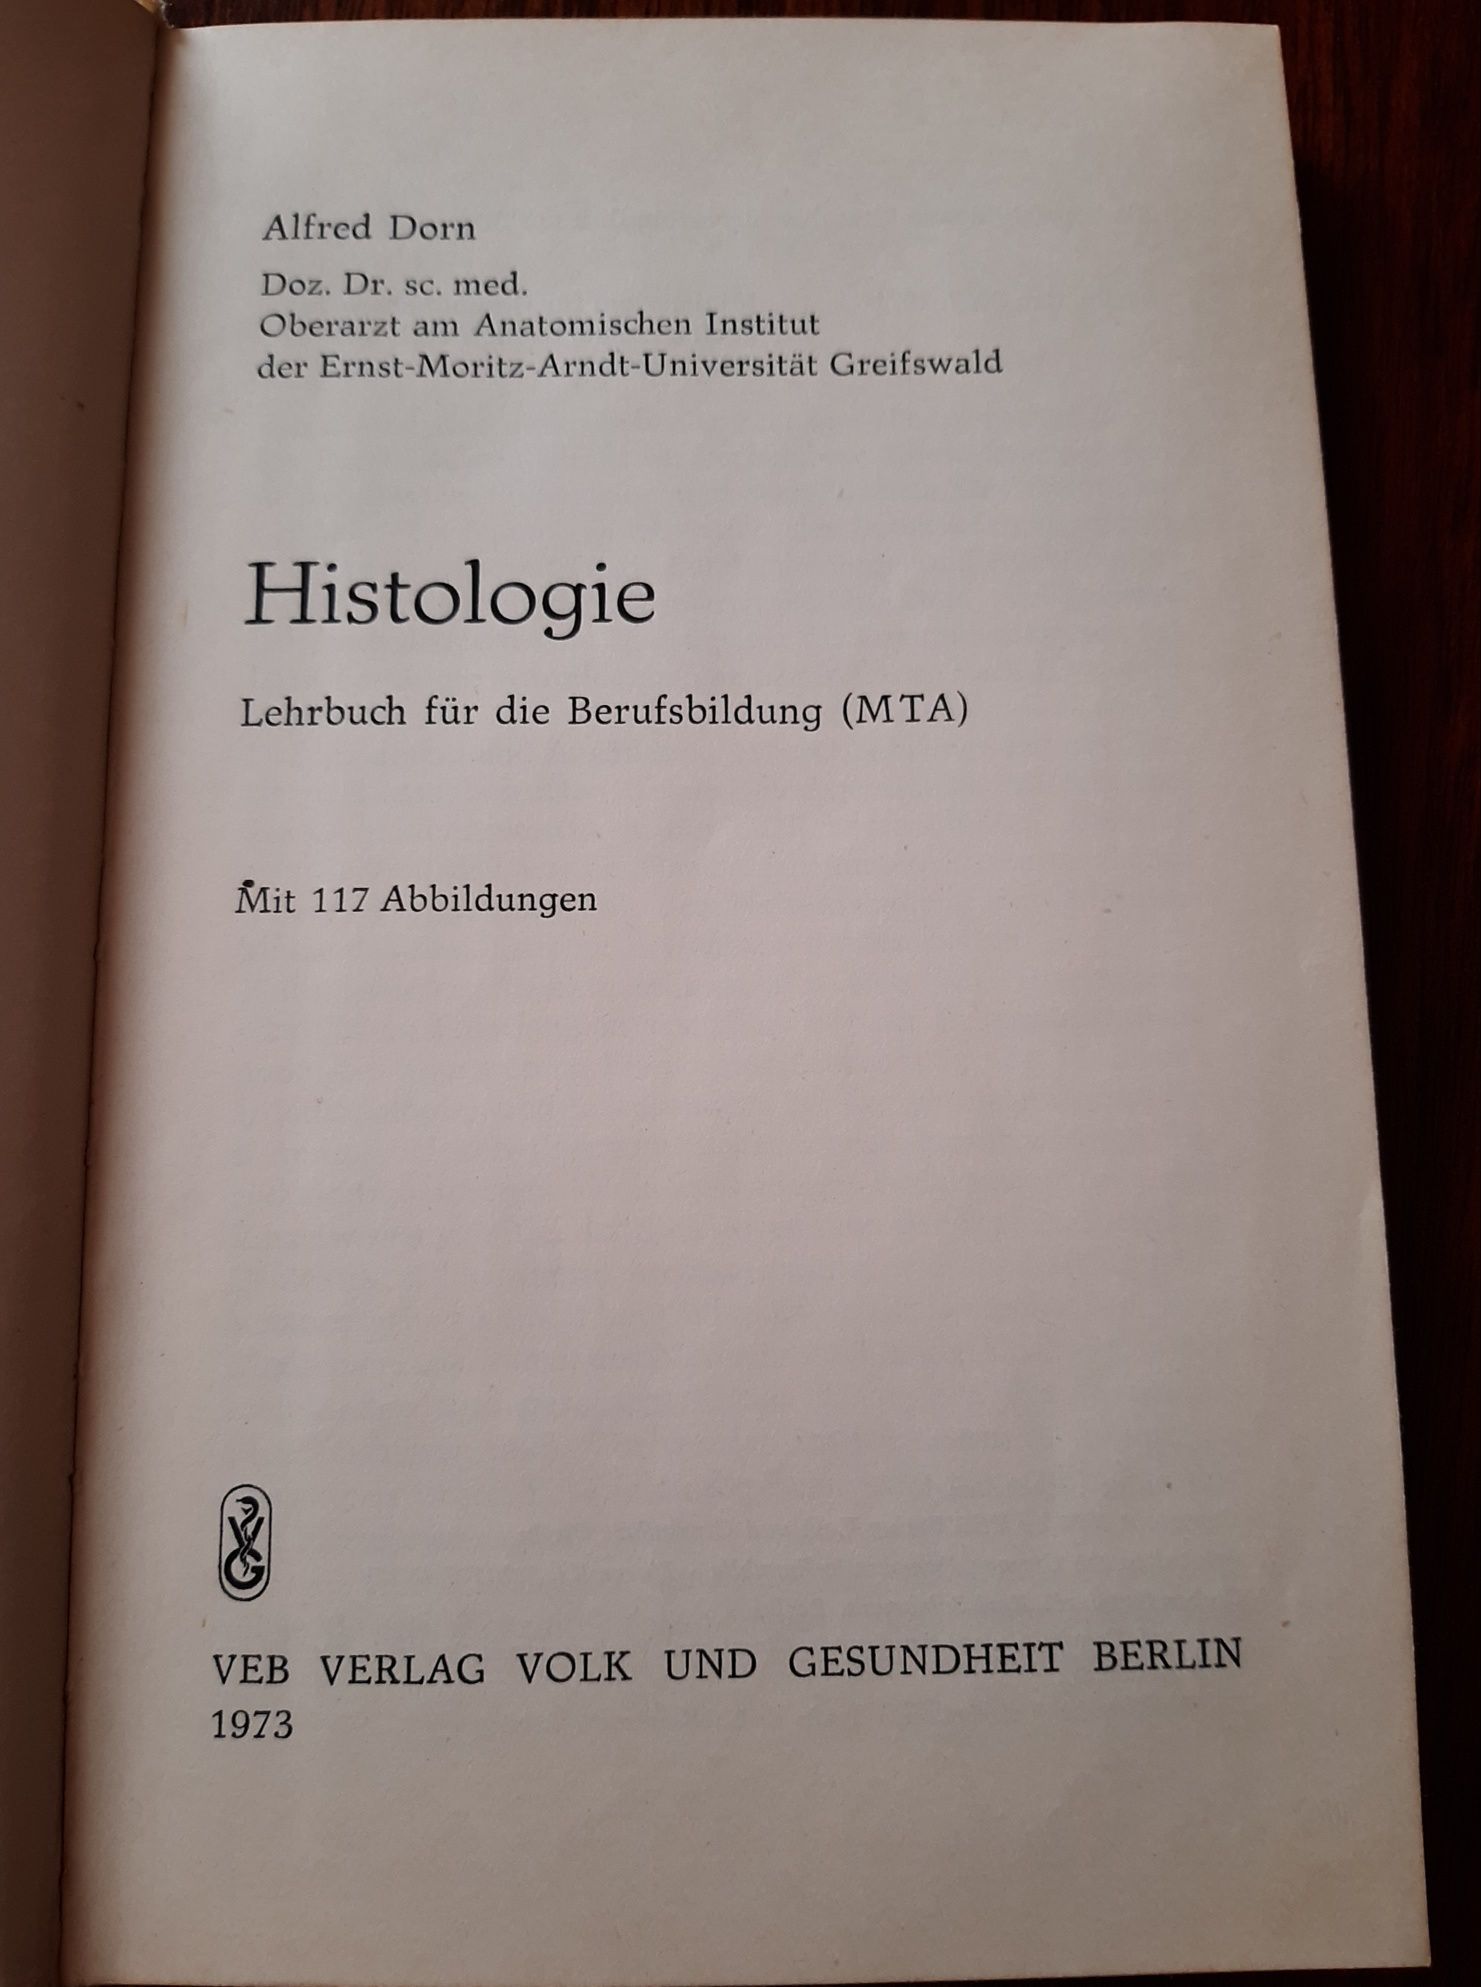 Histologie.A.Dorn,1973